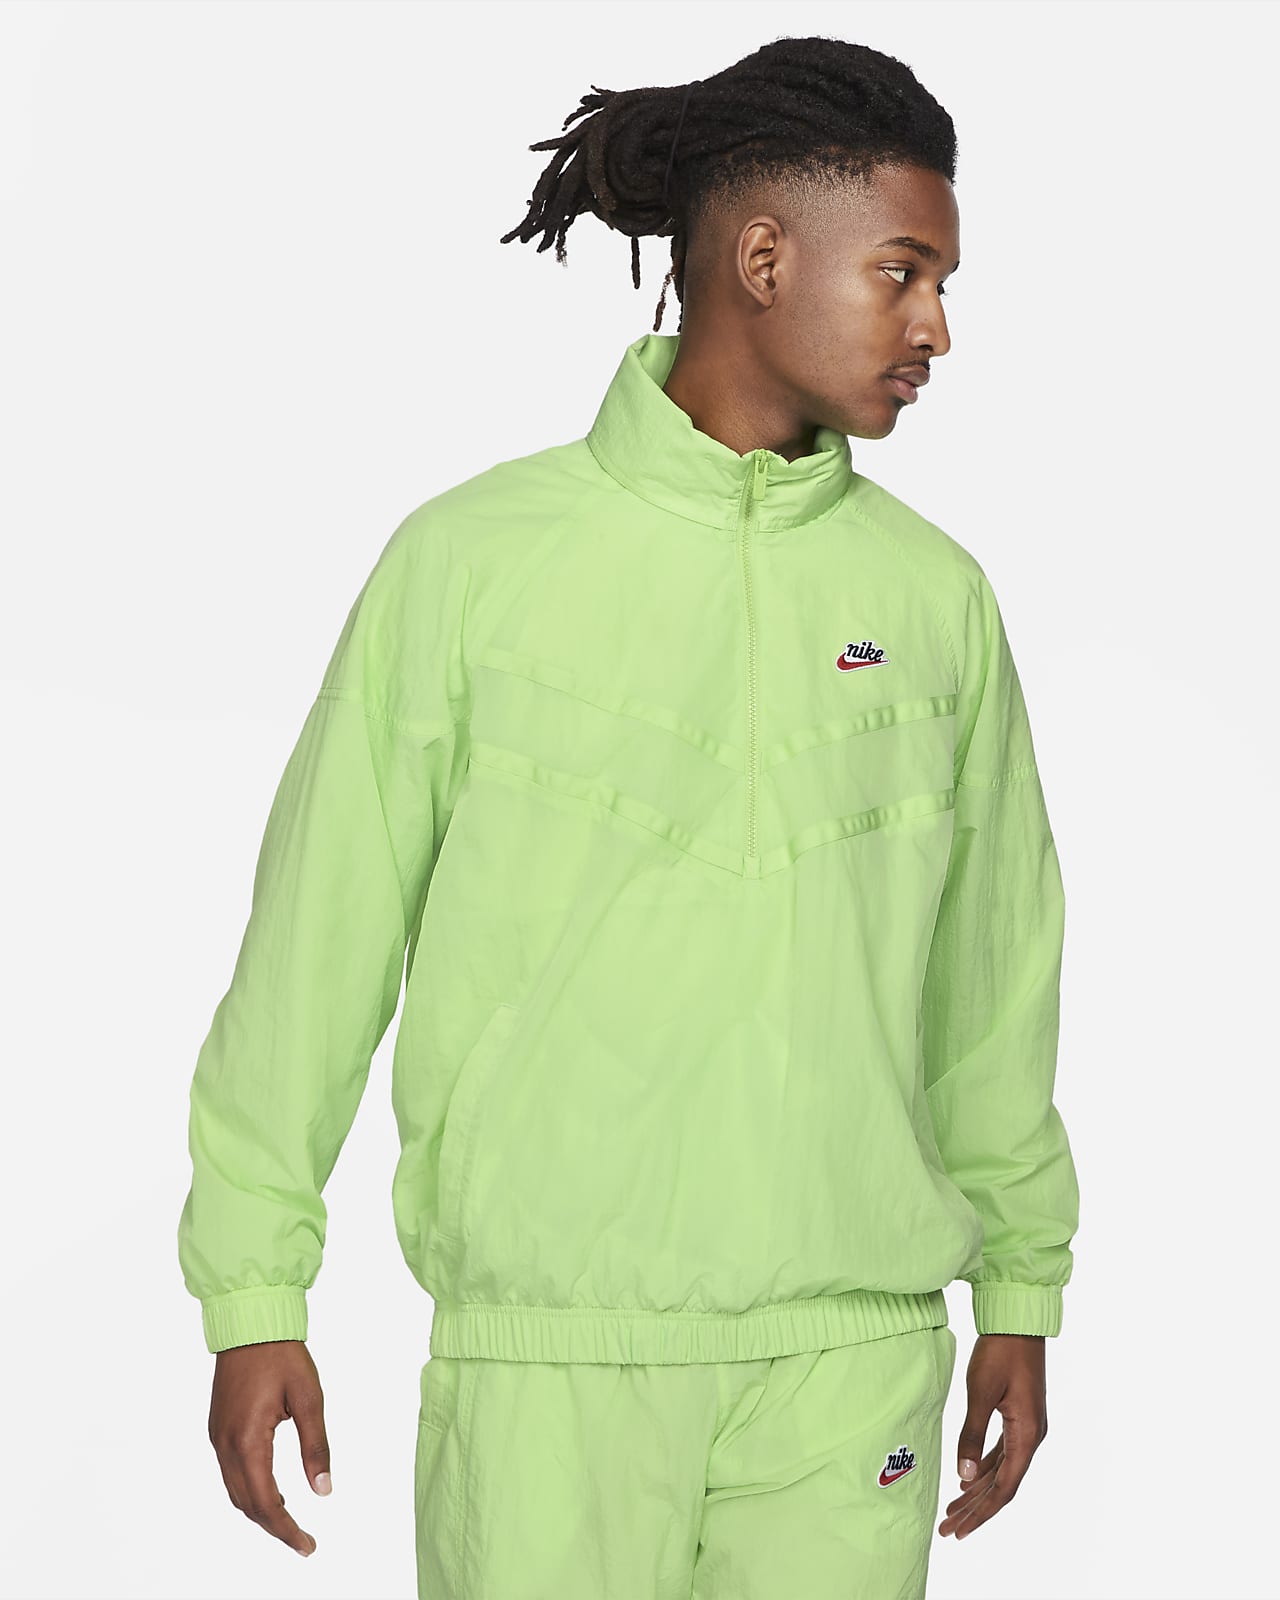 lime green jacket nike